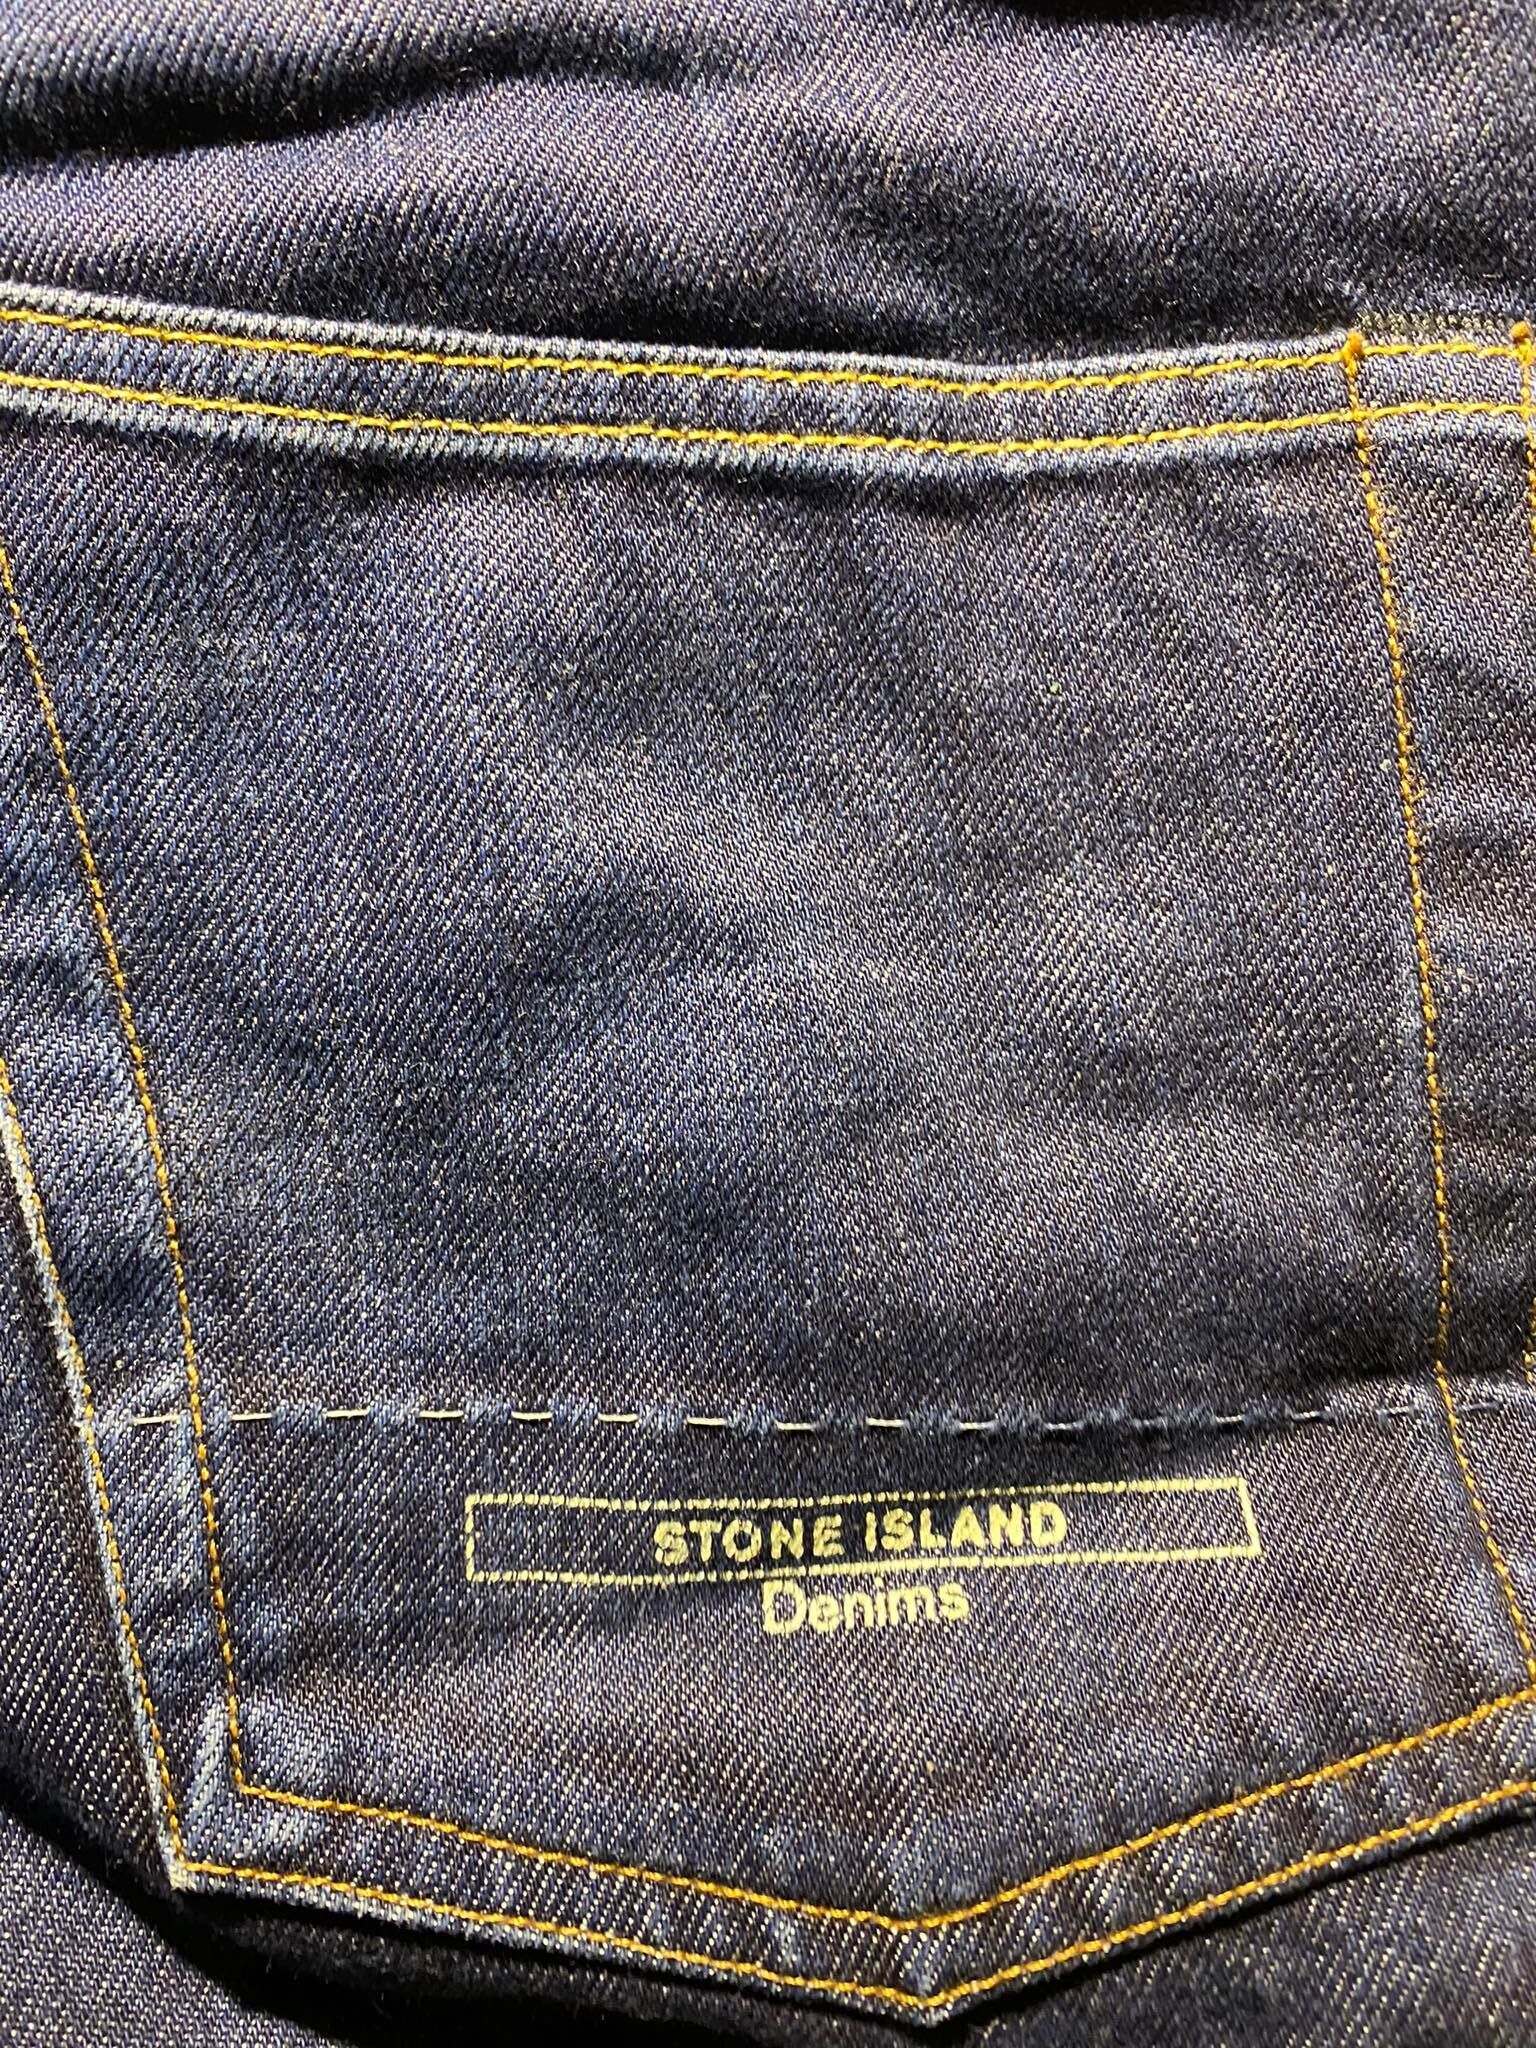 Stone Island Stone Island Denims Jeans Vintage Back Pocket Logo Size US 31 - 3 Thumbnail